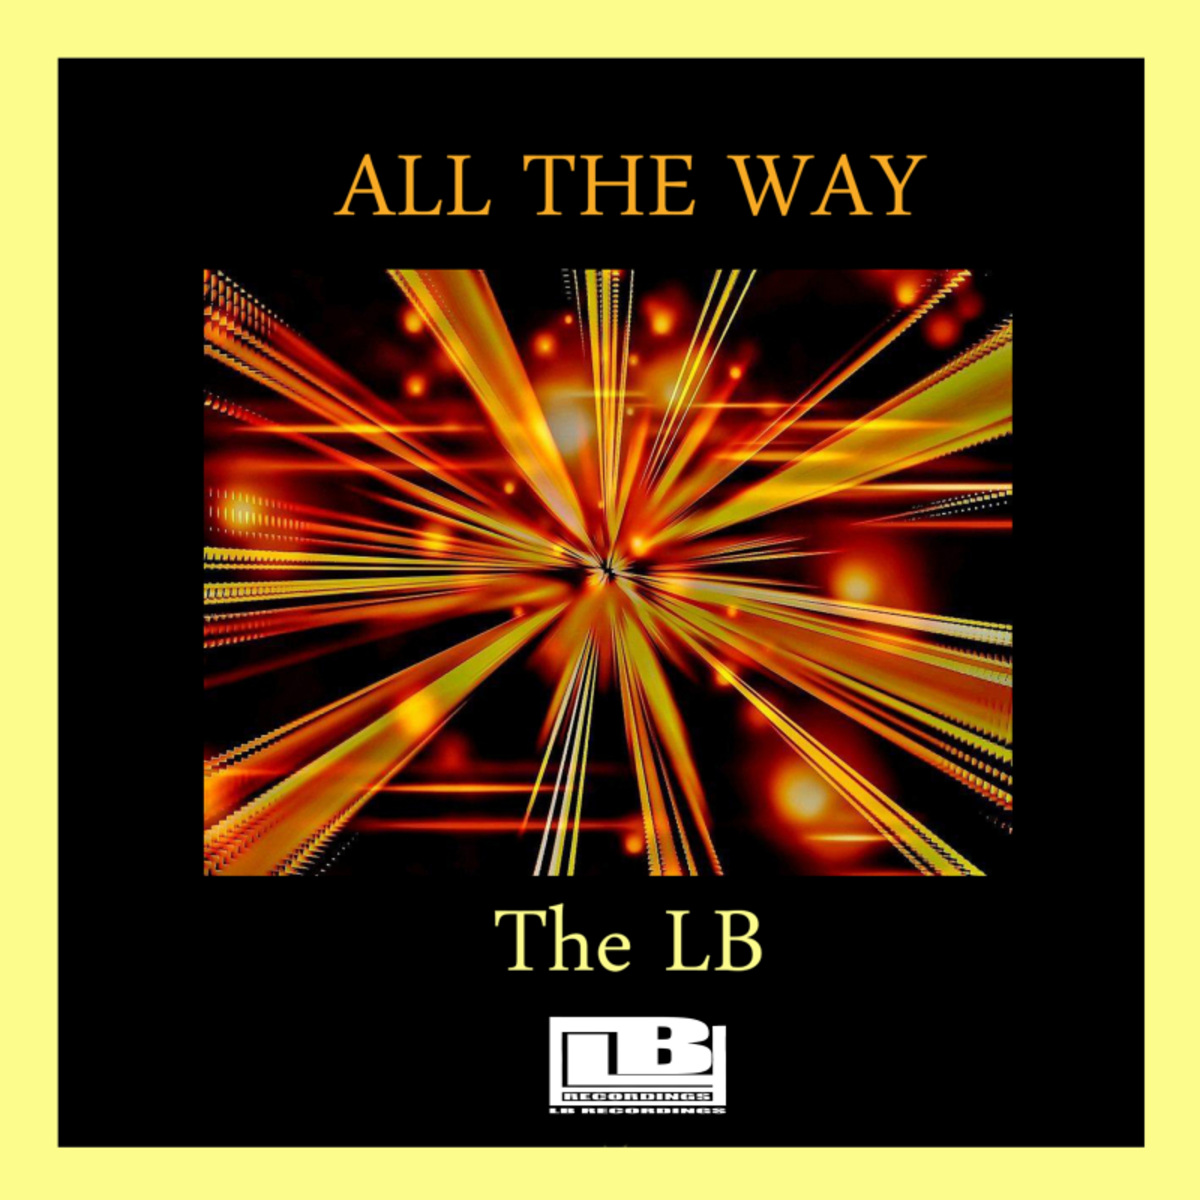 The Lb - All The Way / LB Recordings